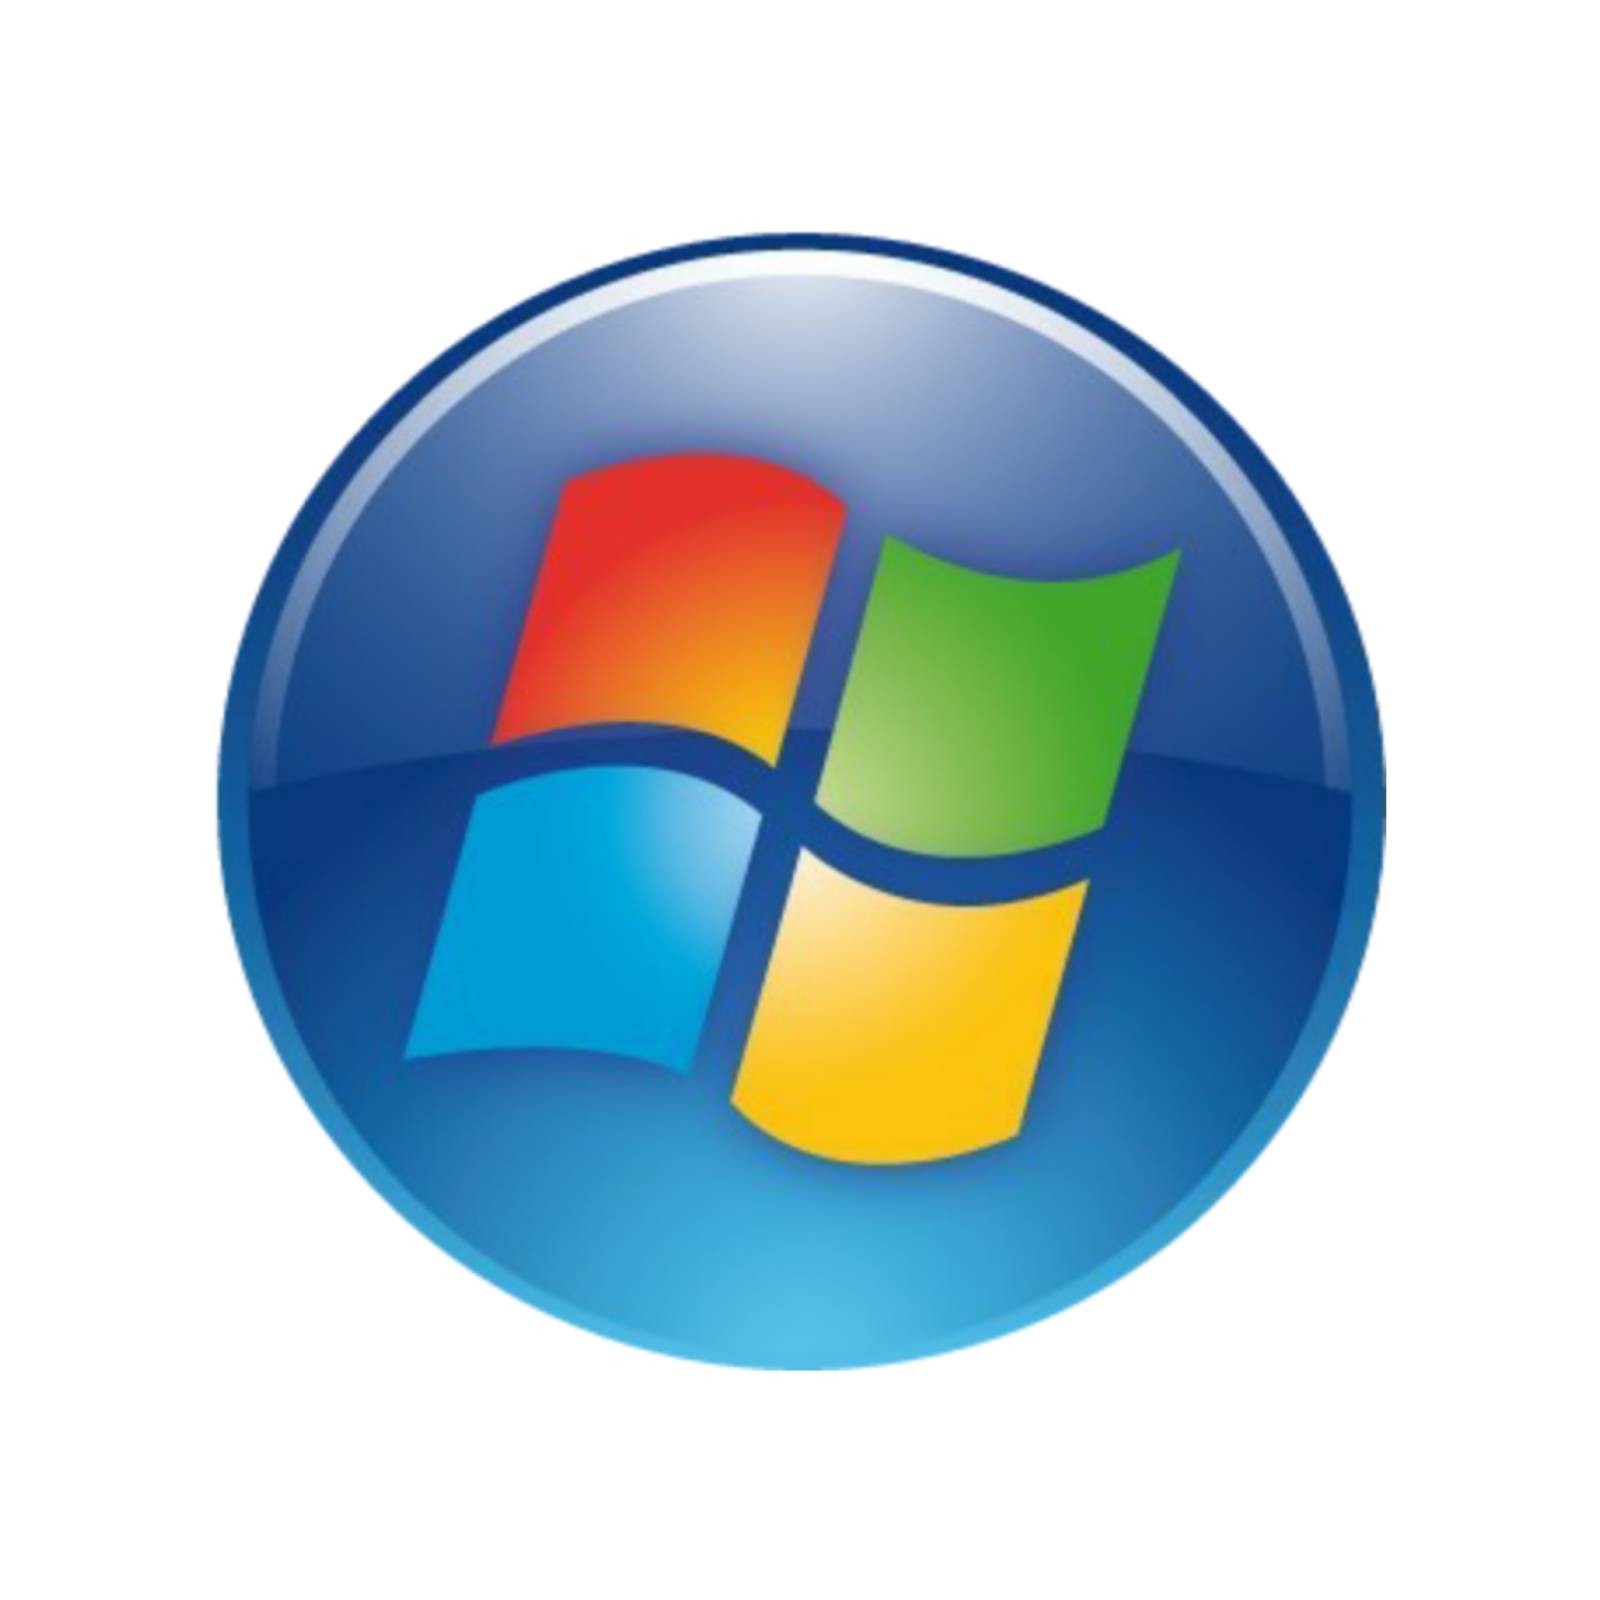 Windows 7 icons. Кнопка пуск виндовс 7. Меню пуск виндовс 7. Значок Windows 7. Значок пуск.